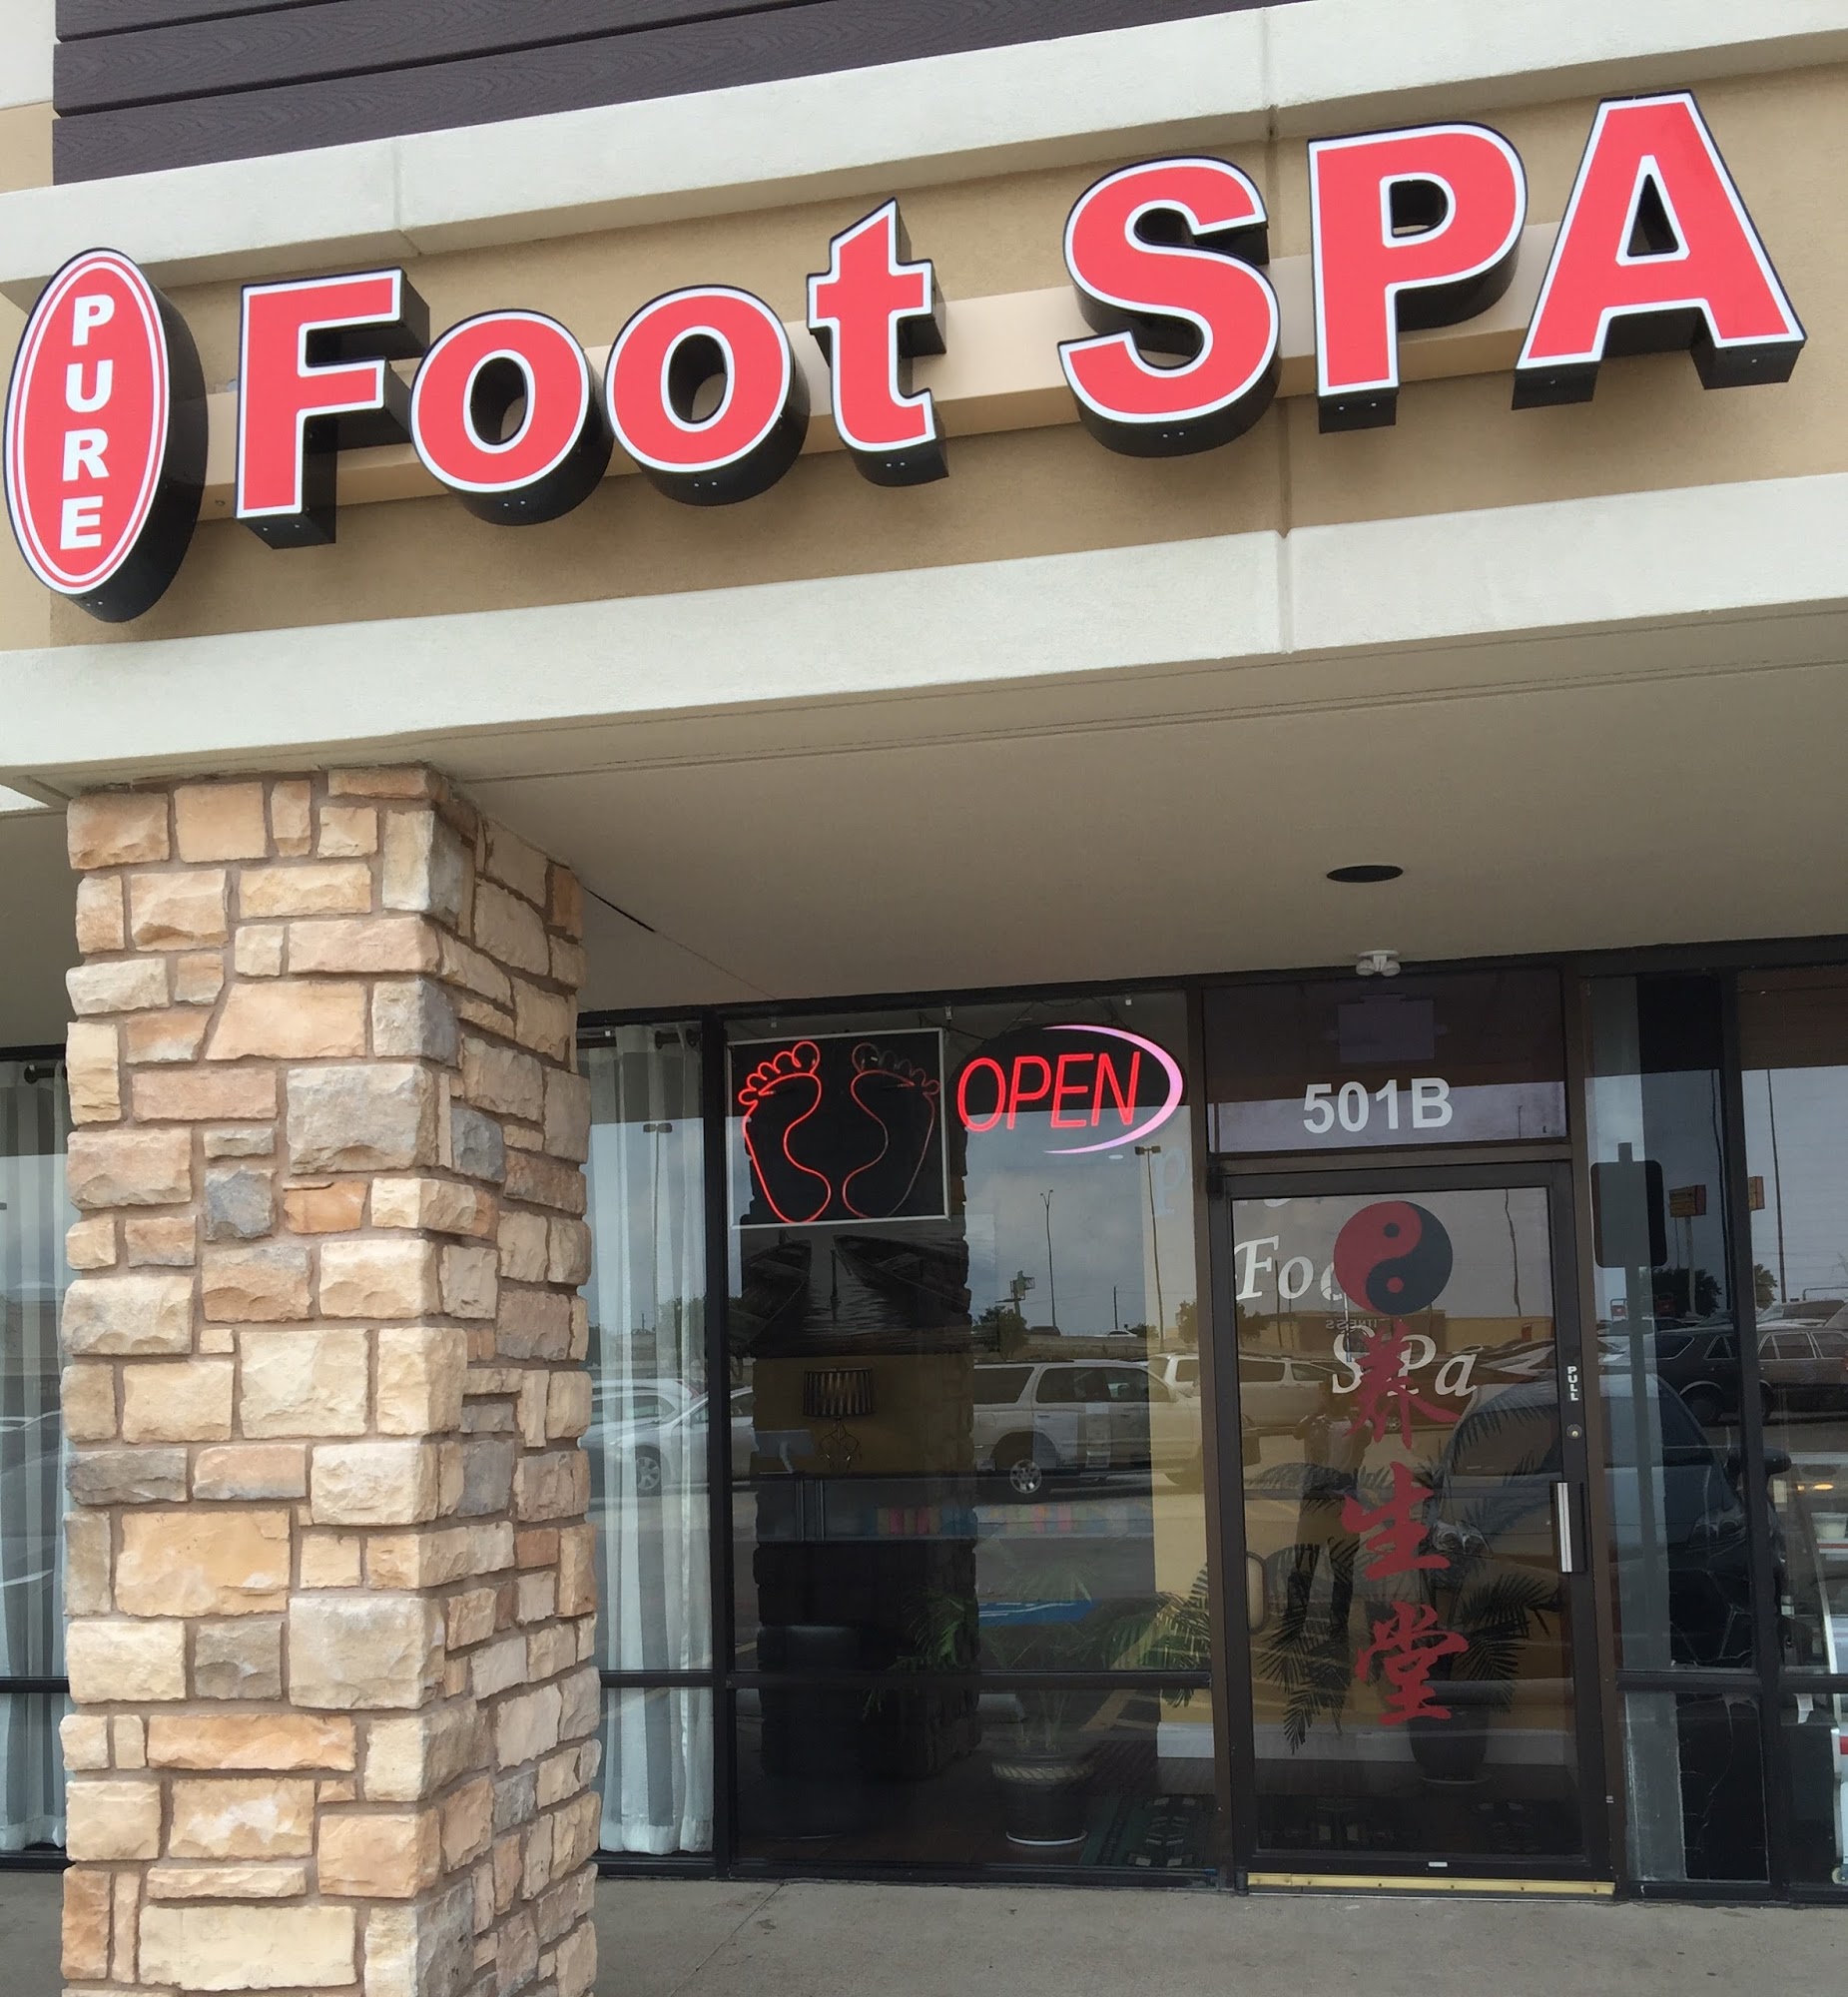 Pure foot spa